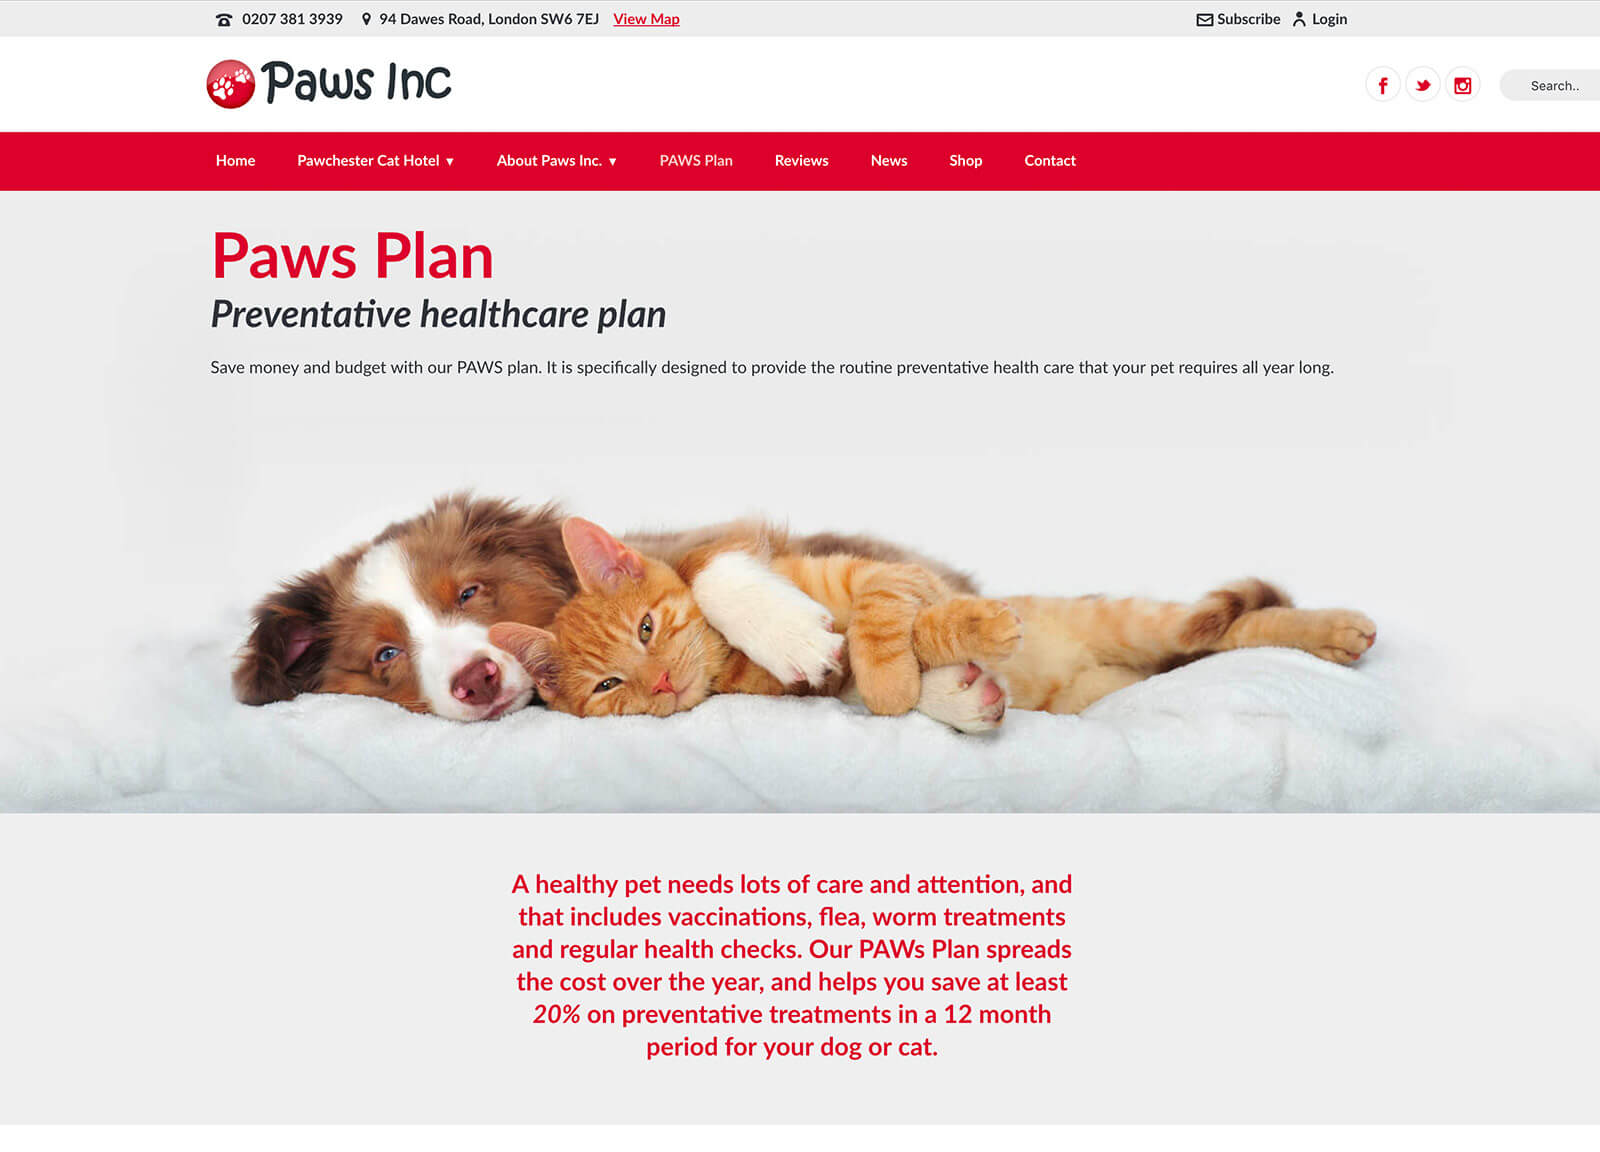 Cat hotel and vet practice website design - Healthy pet club page